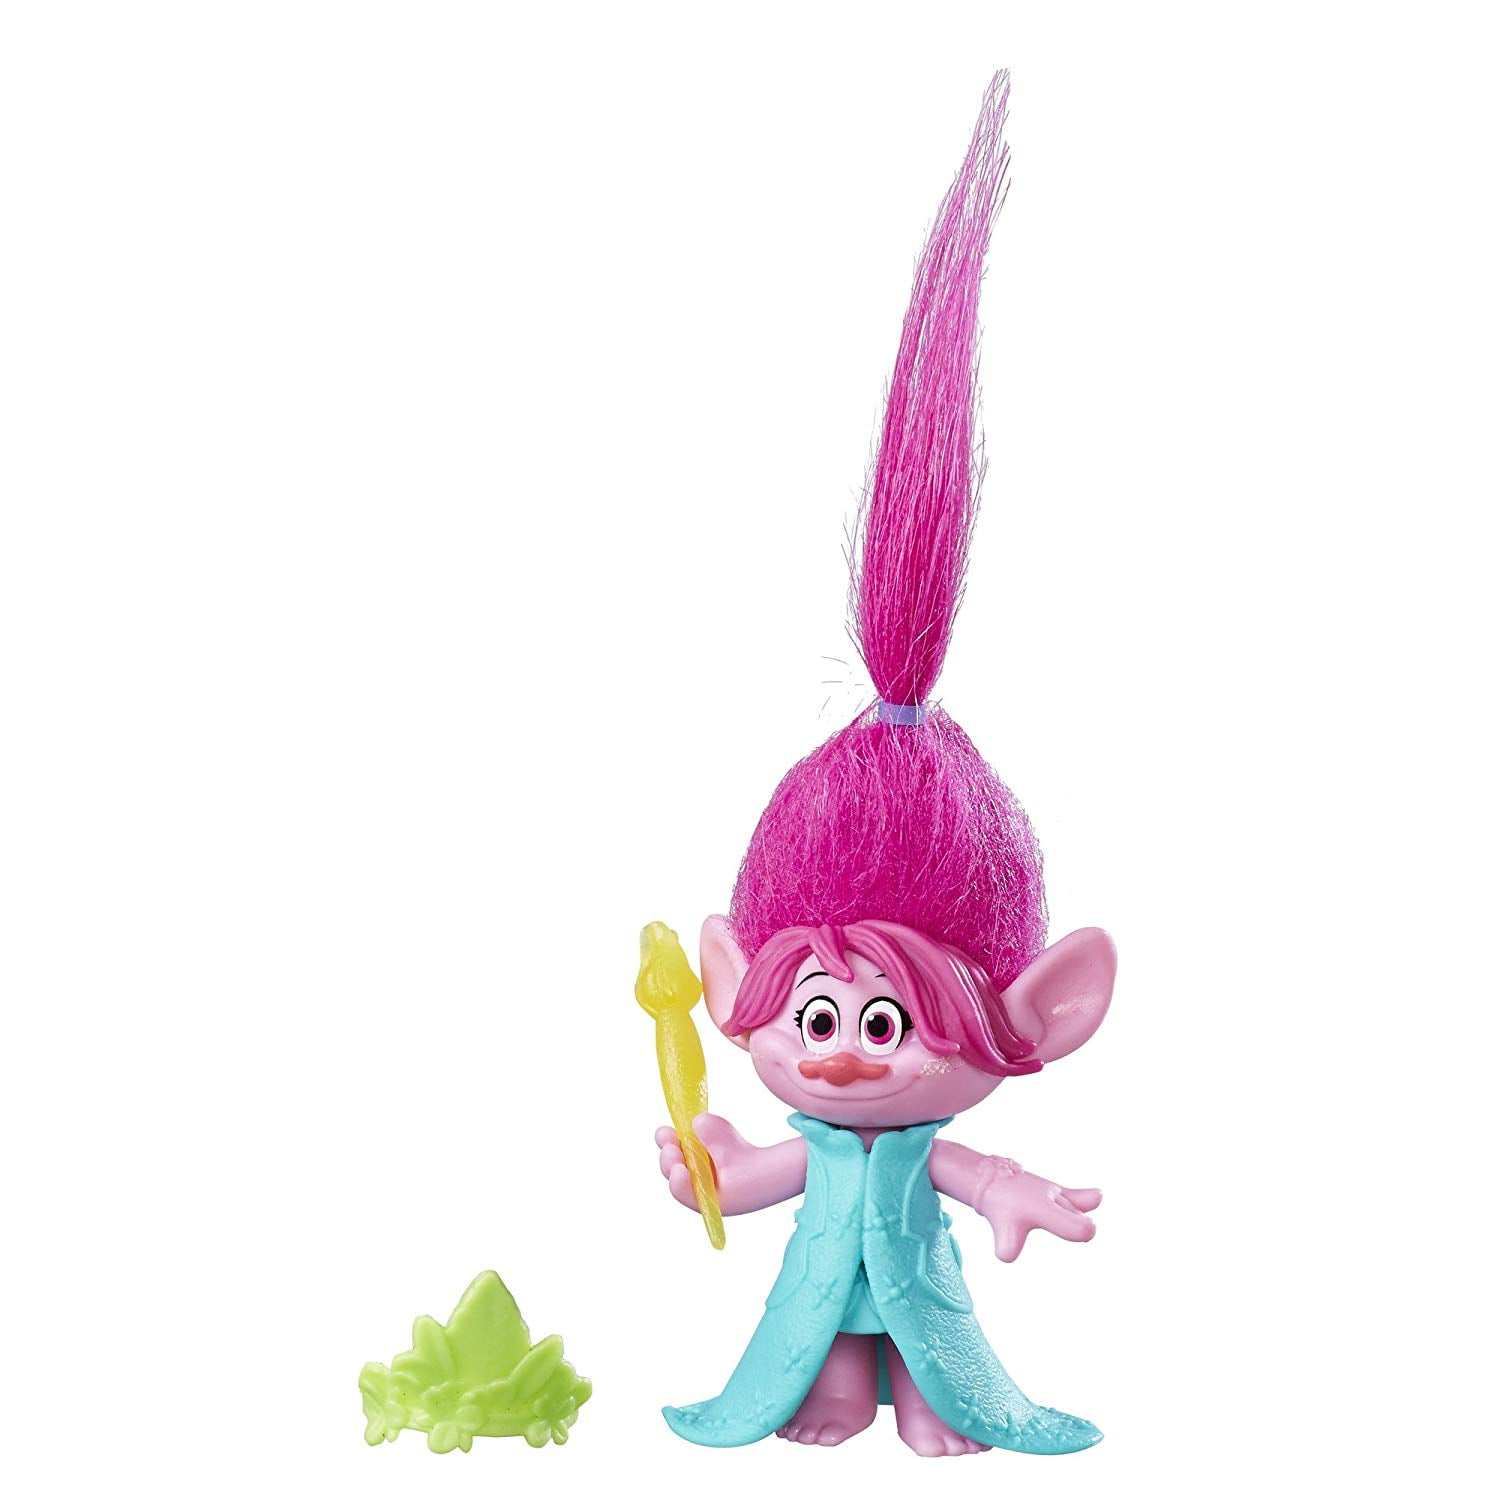 Dreamworks Trolls Poppy Figure Attachable Collectible Critter Hasbro E0160 for sale online